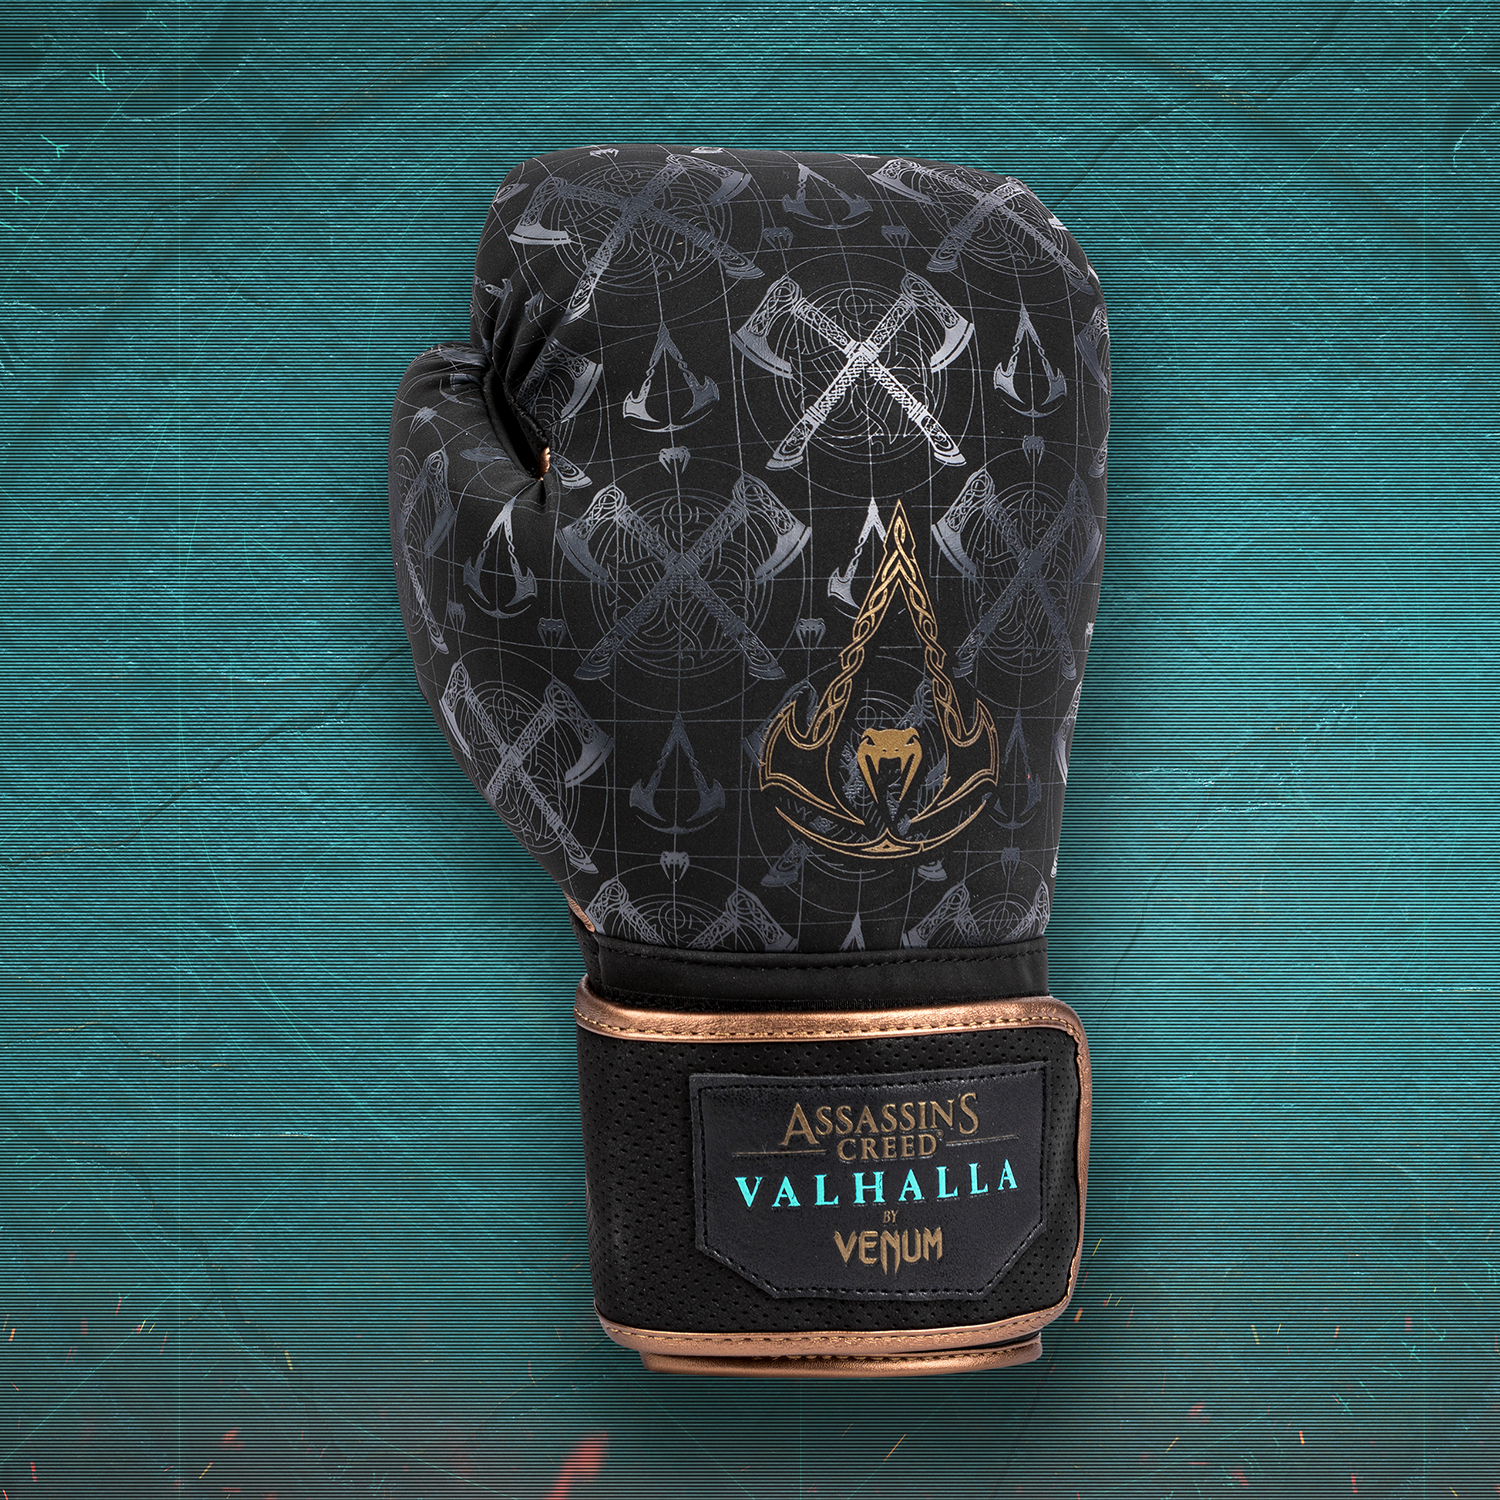 Assassins's Creed Valhalla x VENUM partnership